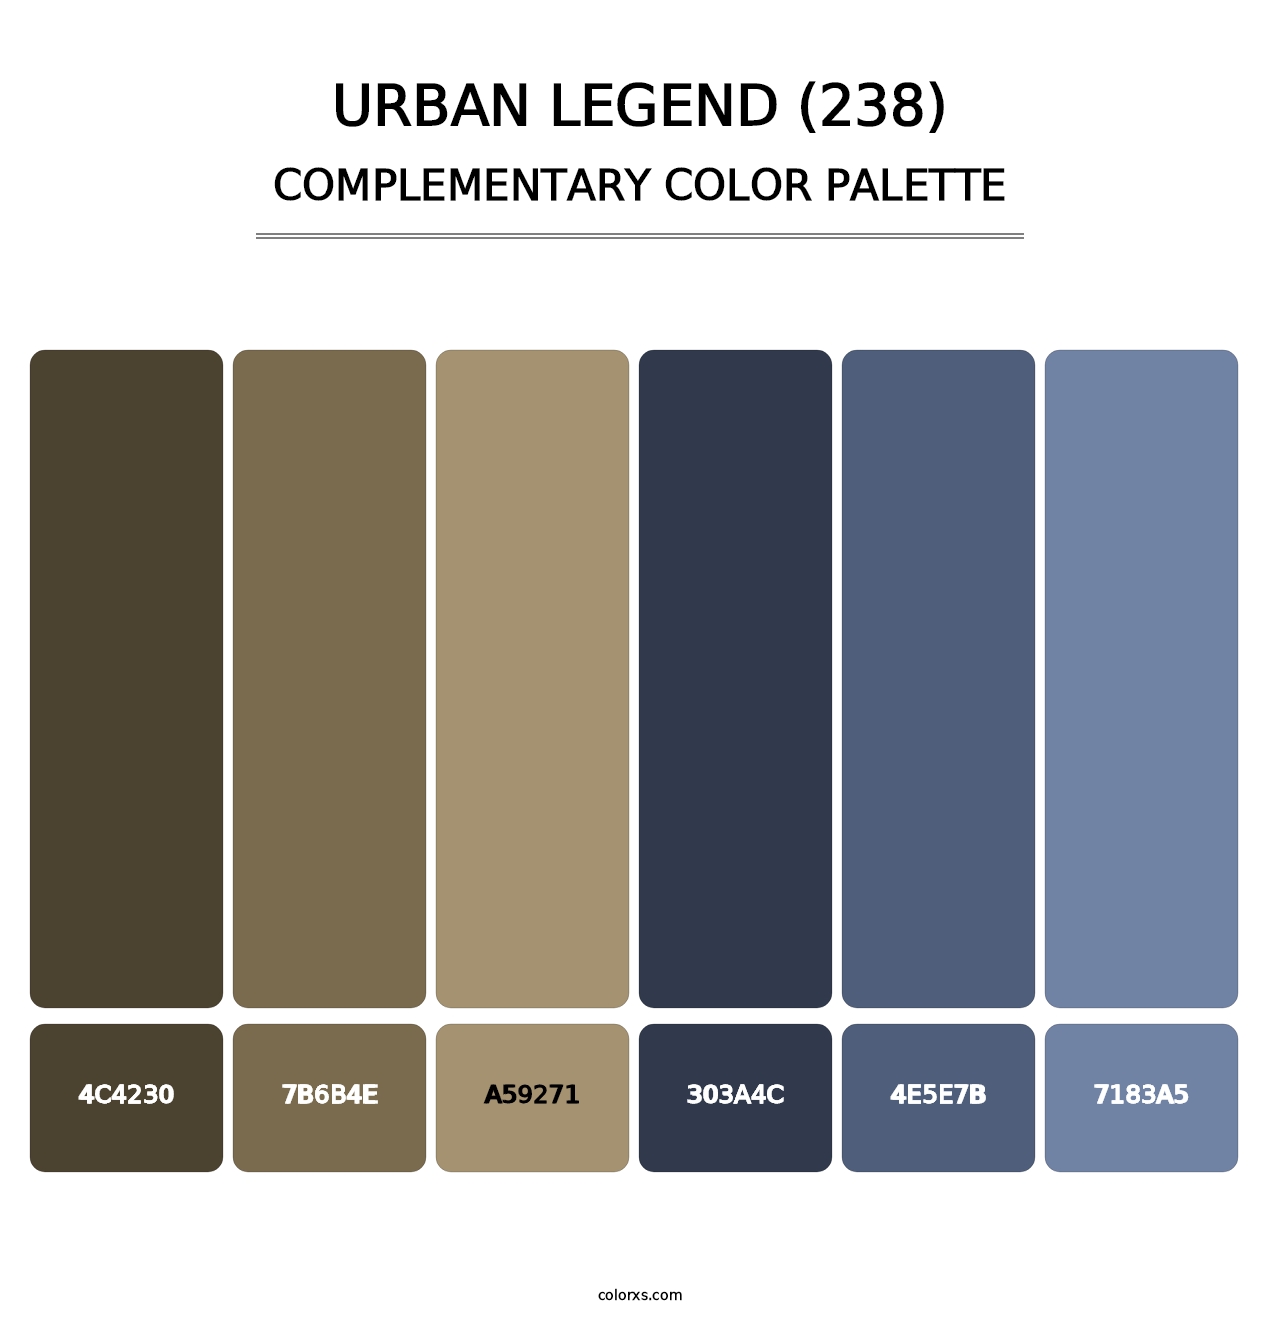 Urban Legend (238) - Complementary Color Palette